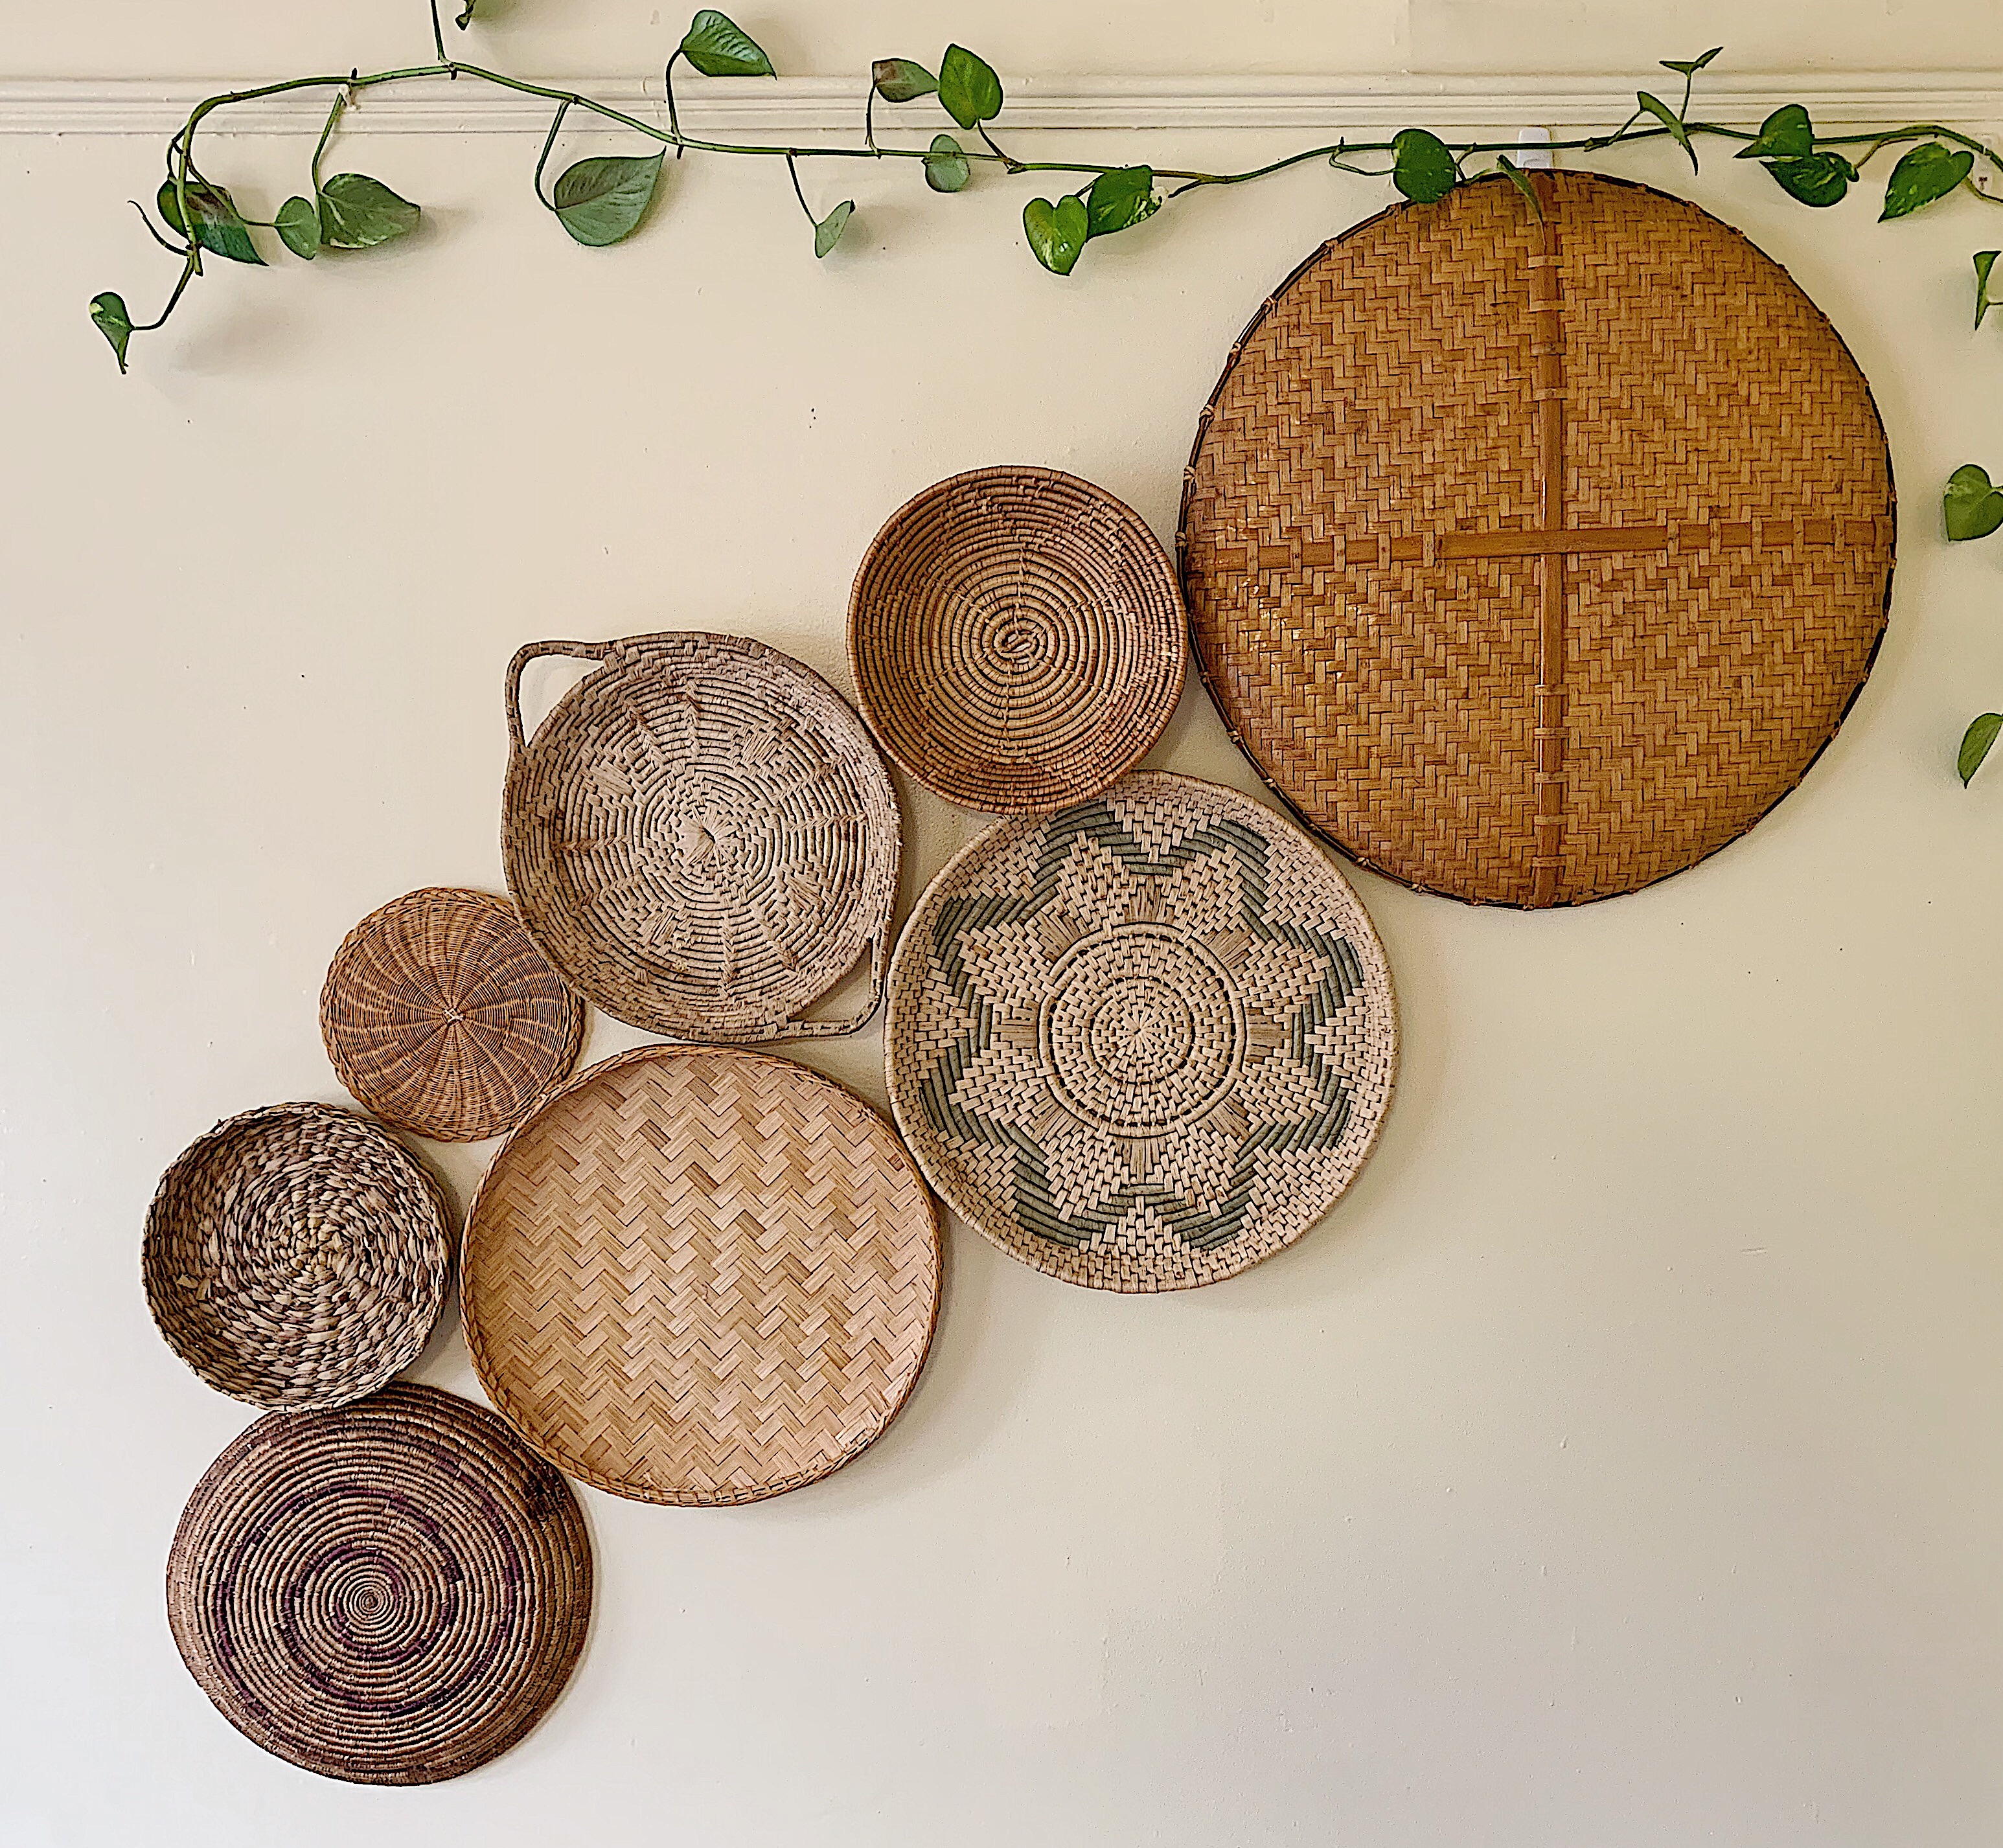 How to create an inexpensive boho basket wall – One Room Challenge Week 2